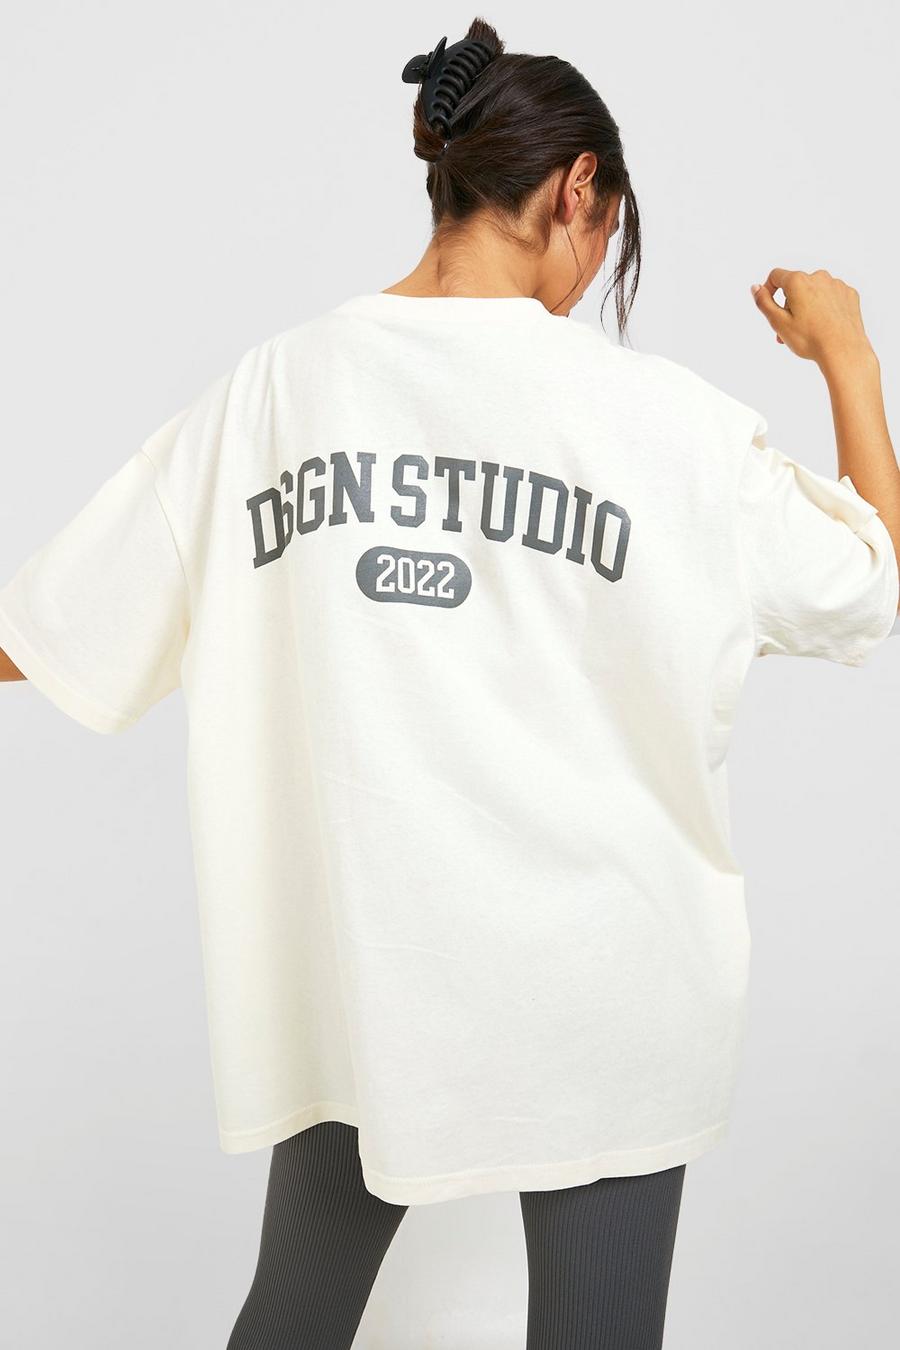 Camiseta oversize con estampado Dsgn Studio en la espalda, Ecru white